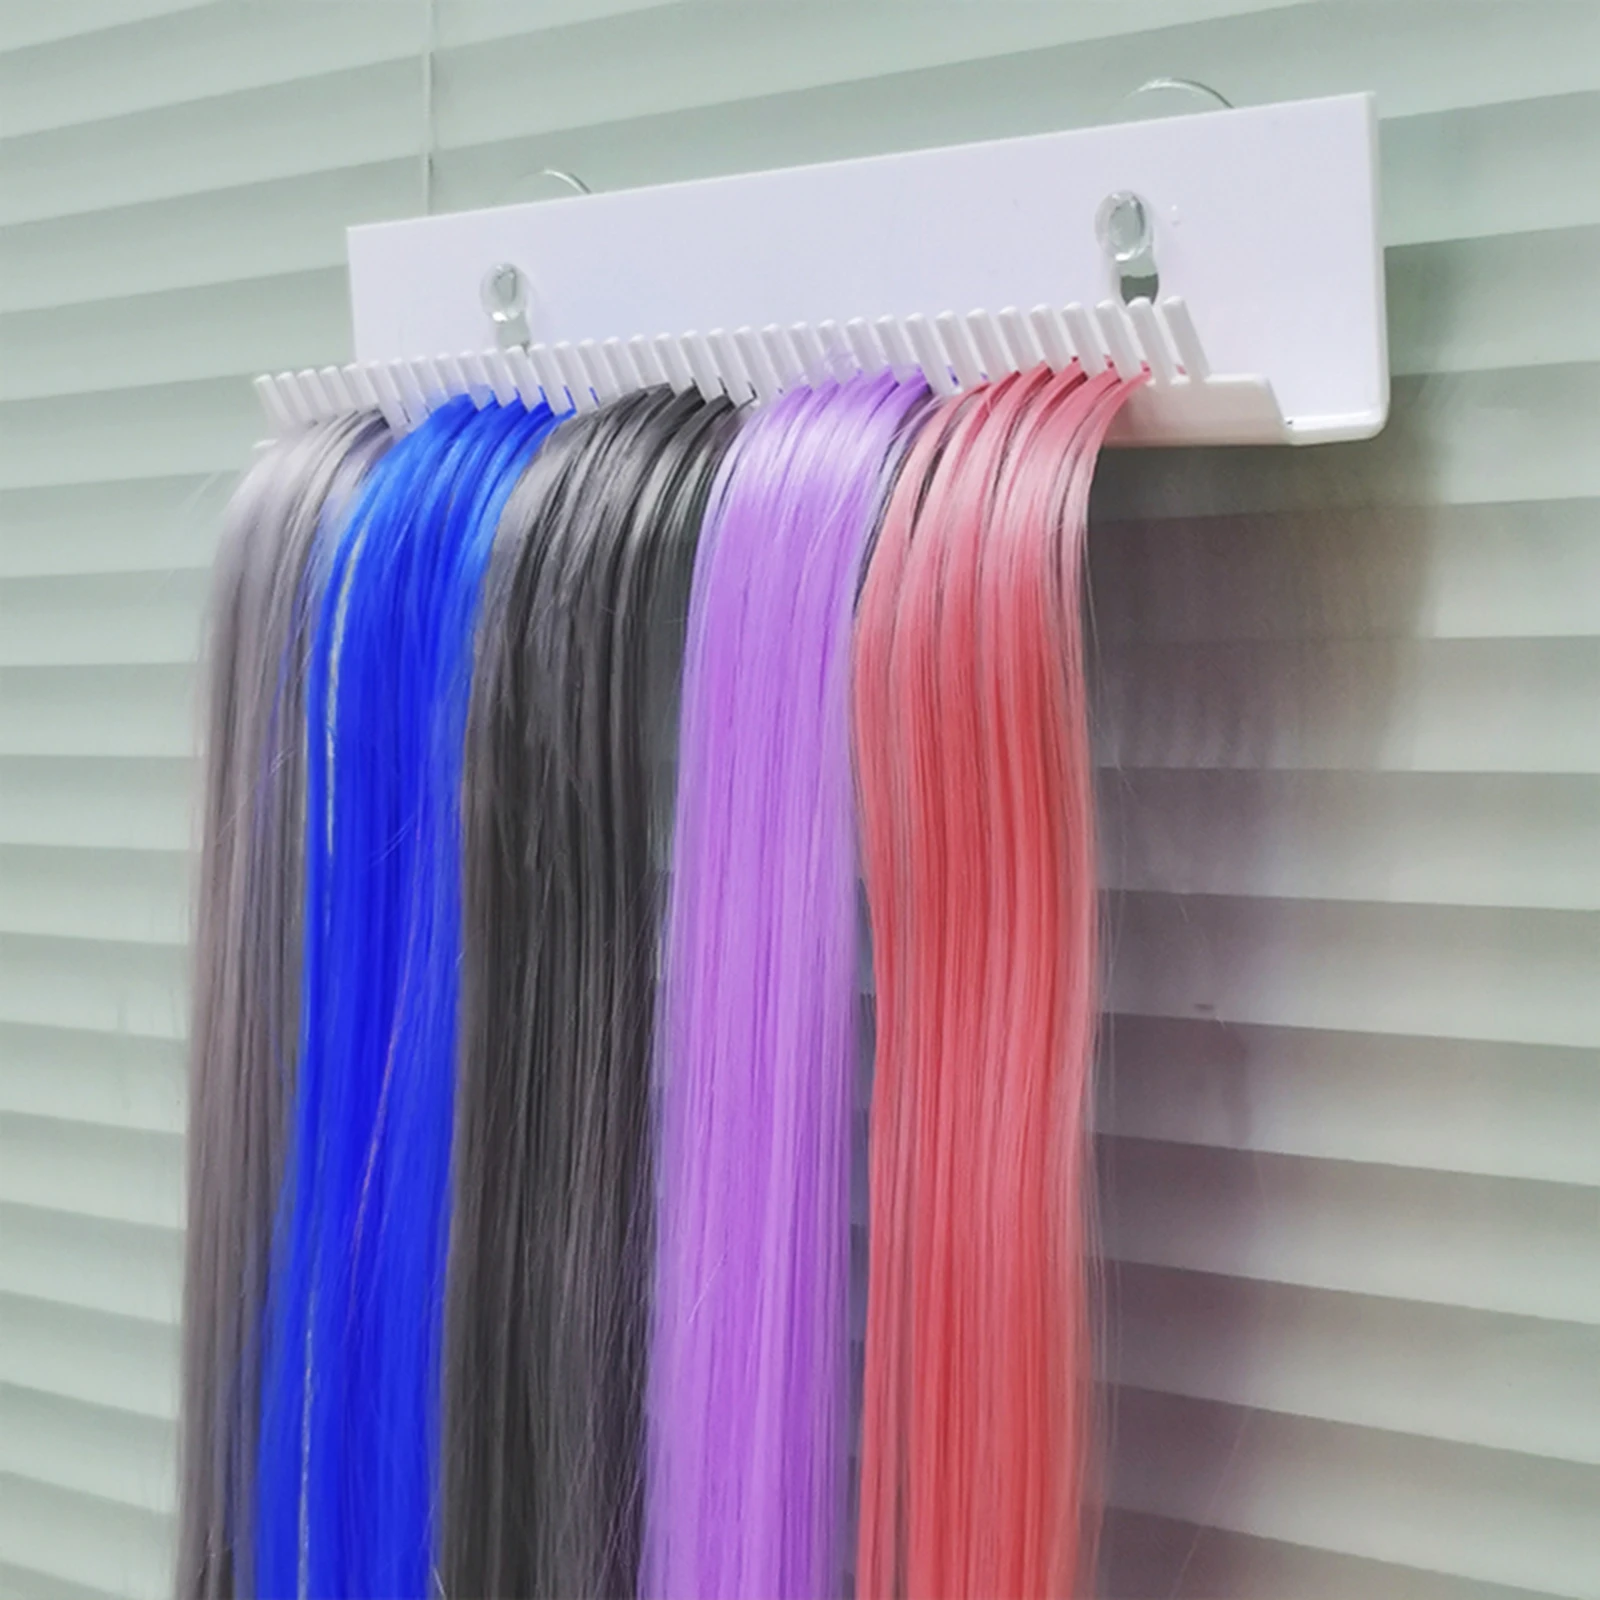 Professional Hair Extension Storage Holder Rack Hanger for Braiding Weaving Hair Extensions Holder Rack Accessory